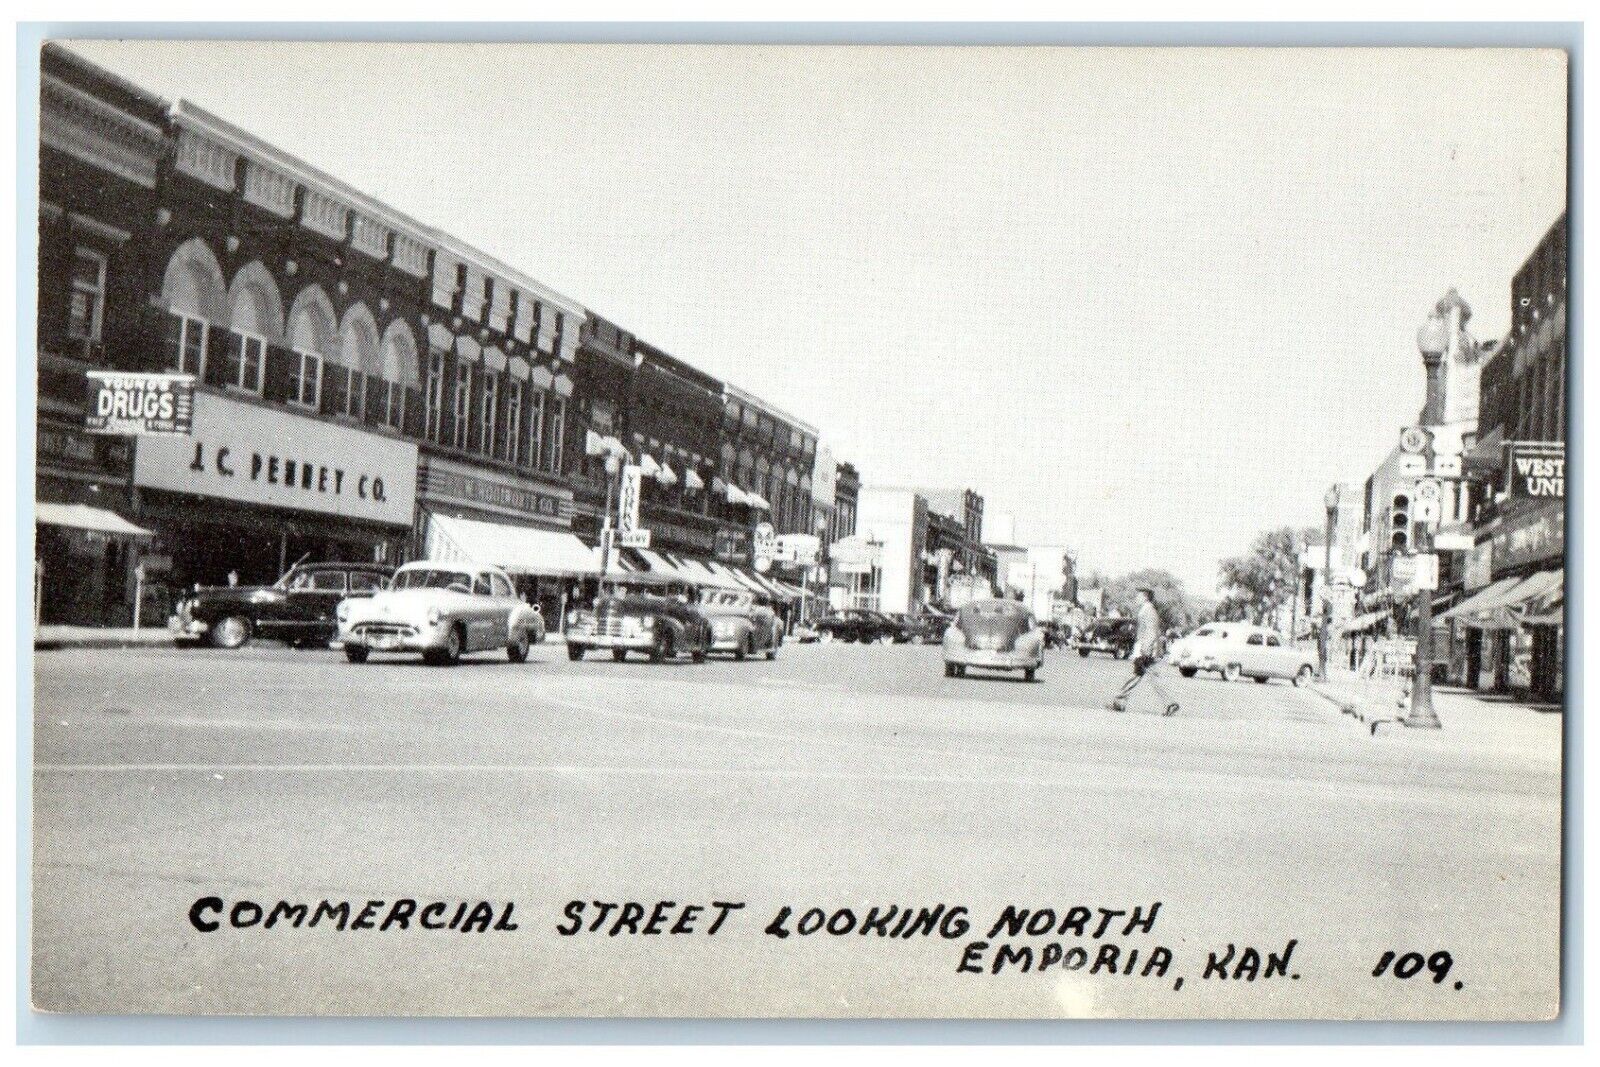 c1940 Commercial Street Looking North Exterior Emporia Kansas Vintage Postcard